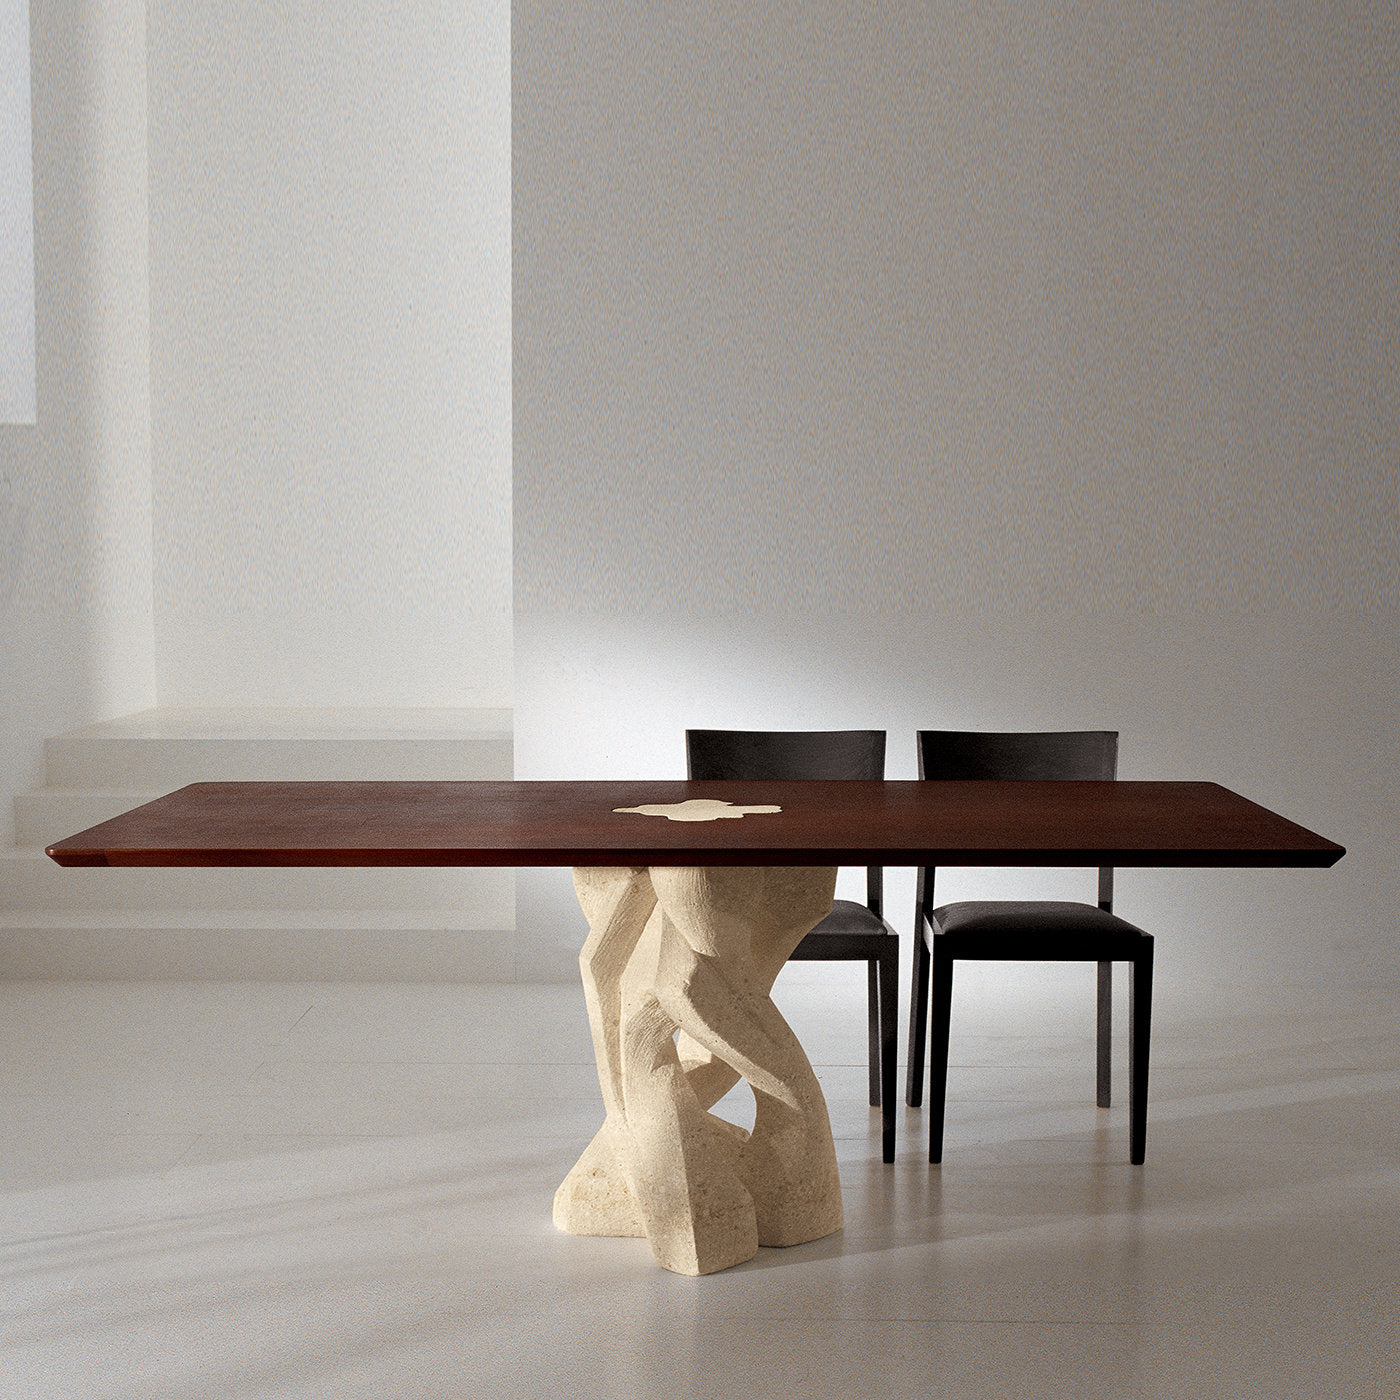 Alex Wood Table by Giandomenico Sandri - Alternative view 1